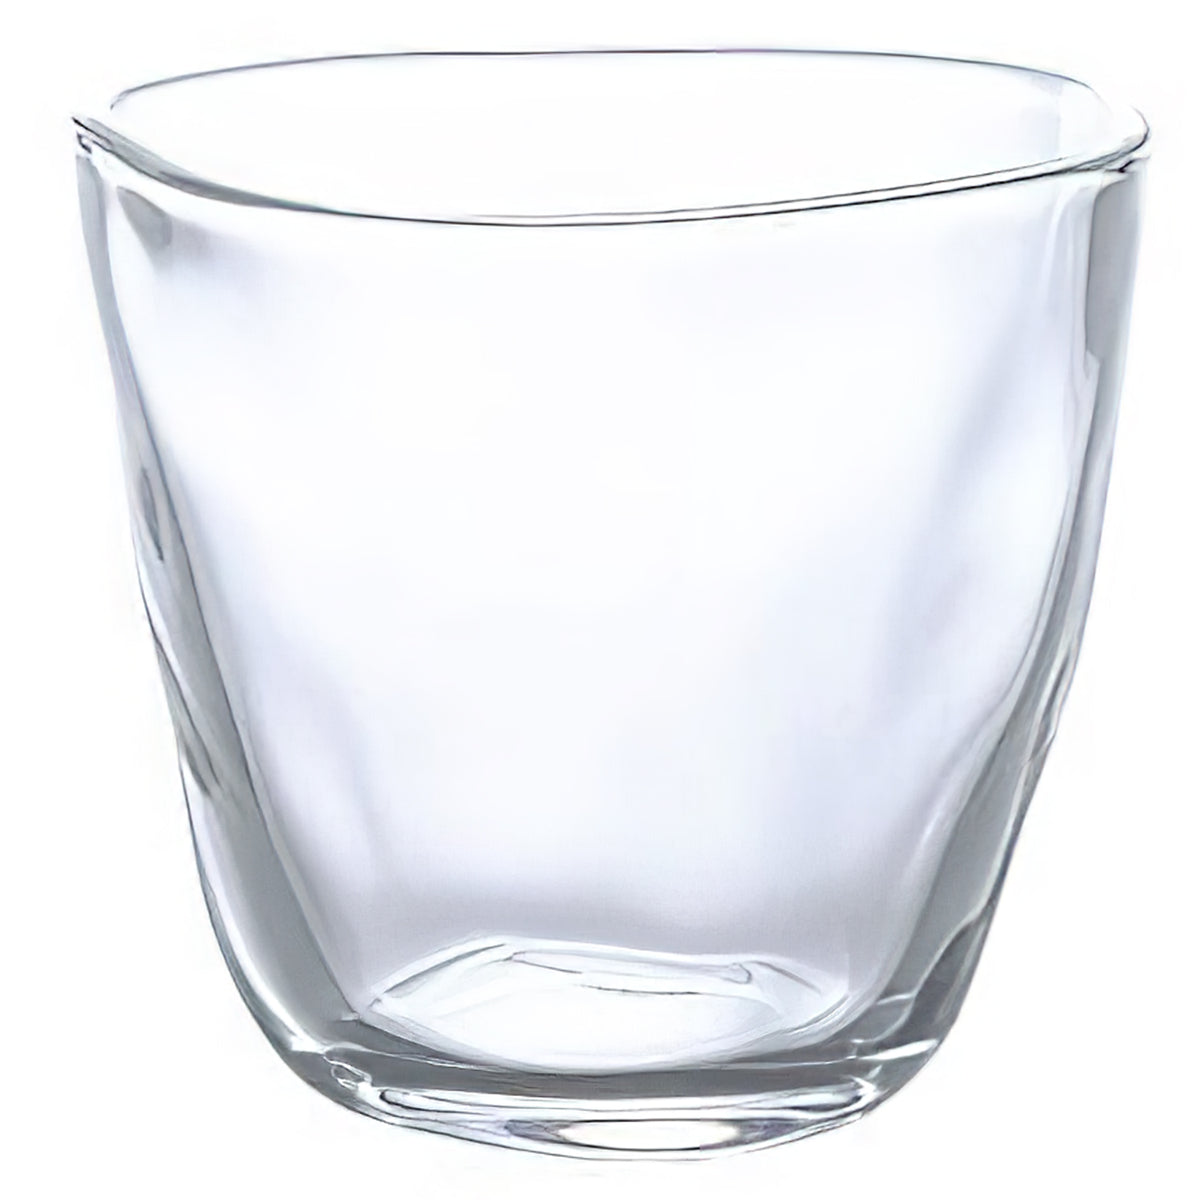 ADERIA Tebineri Soda-Lime Glass Cup 3 Pieces